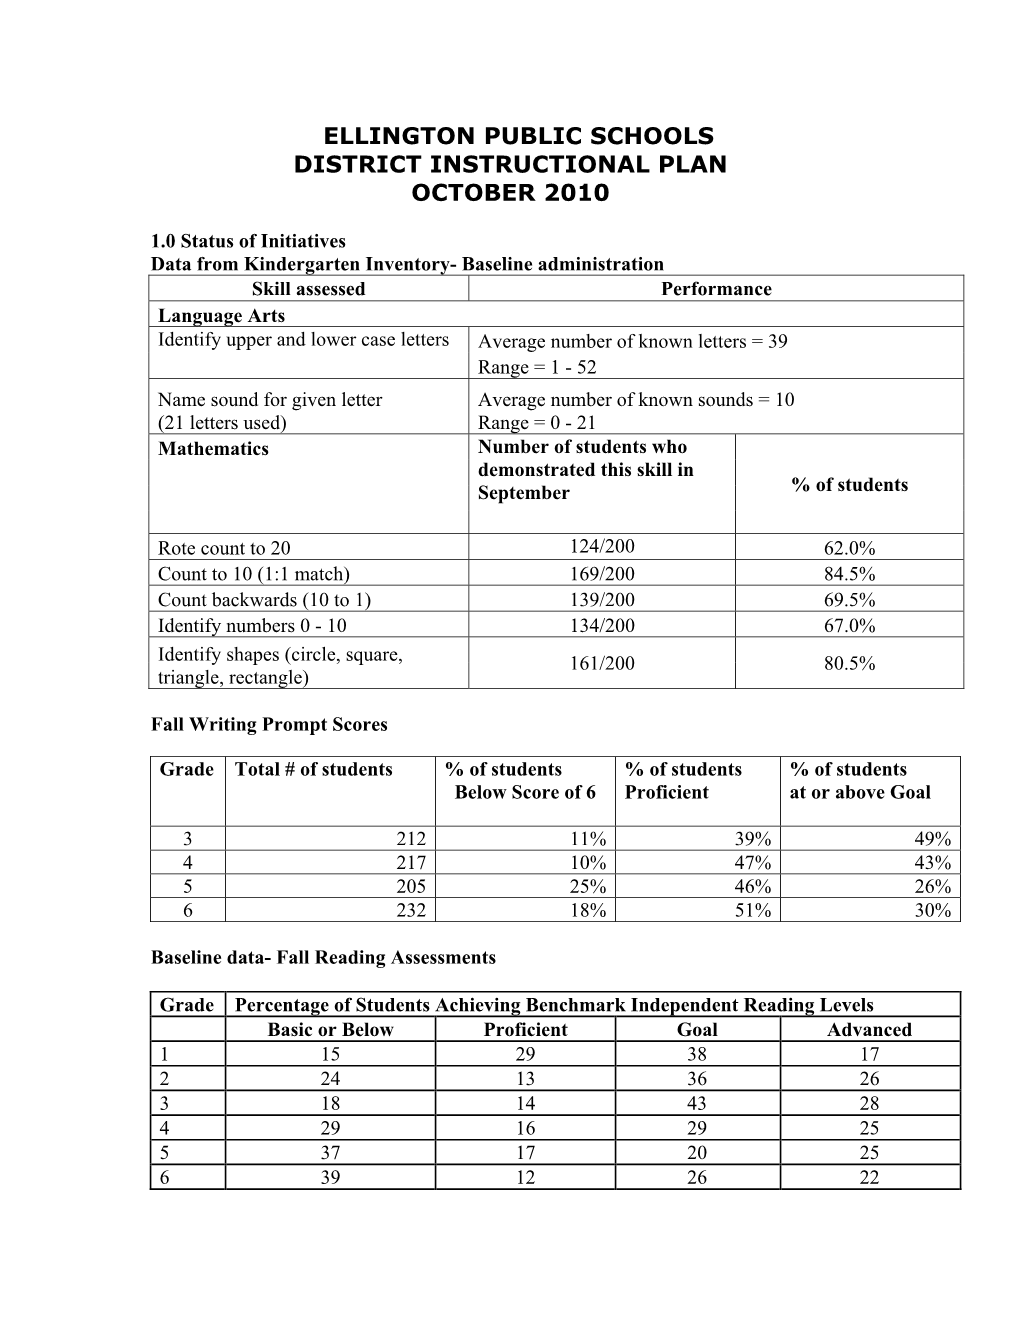 Ellington Public Schools District Instructional Plan October 2010